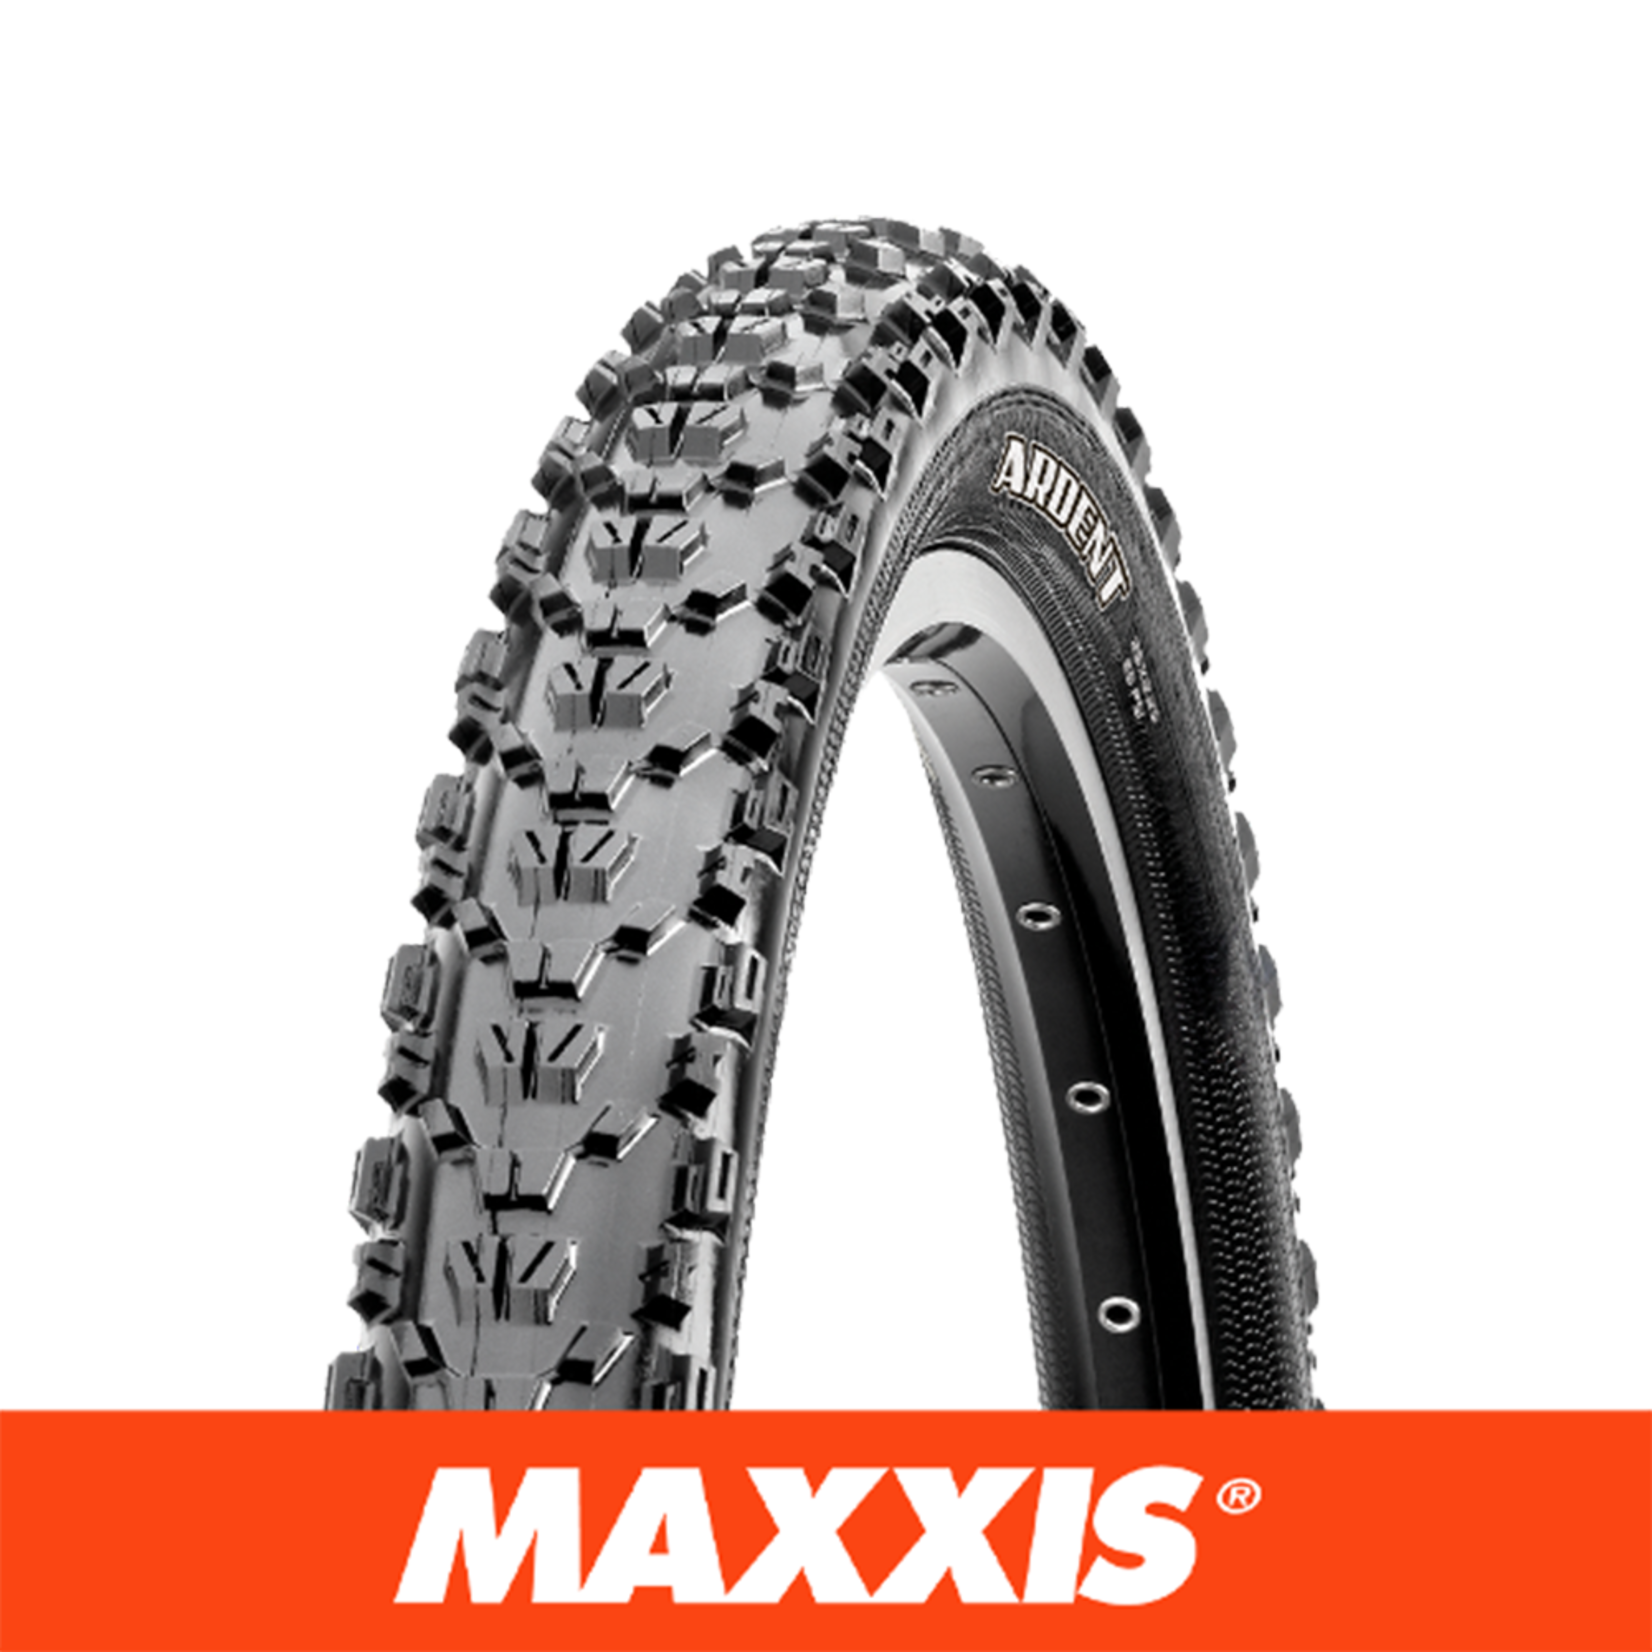 Maxxis Ardent 29 x 2.25 EXO Tubeless Ready Tire - Modern Bike